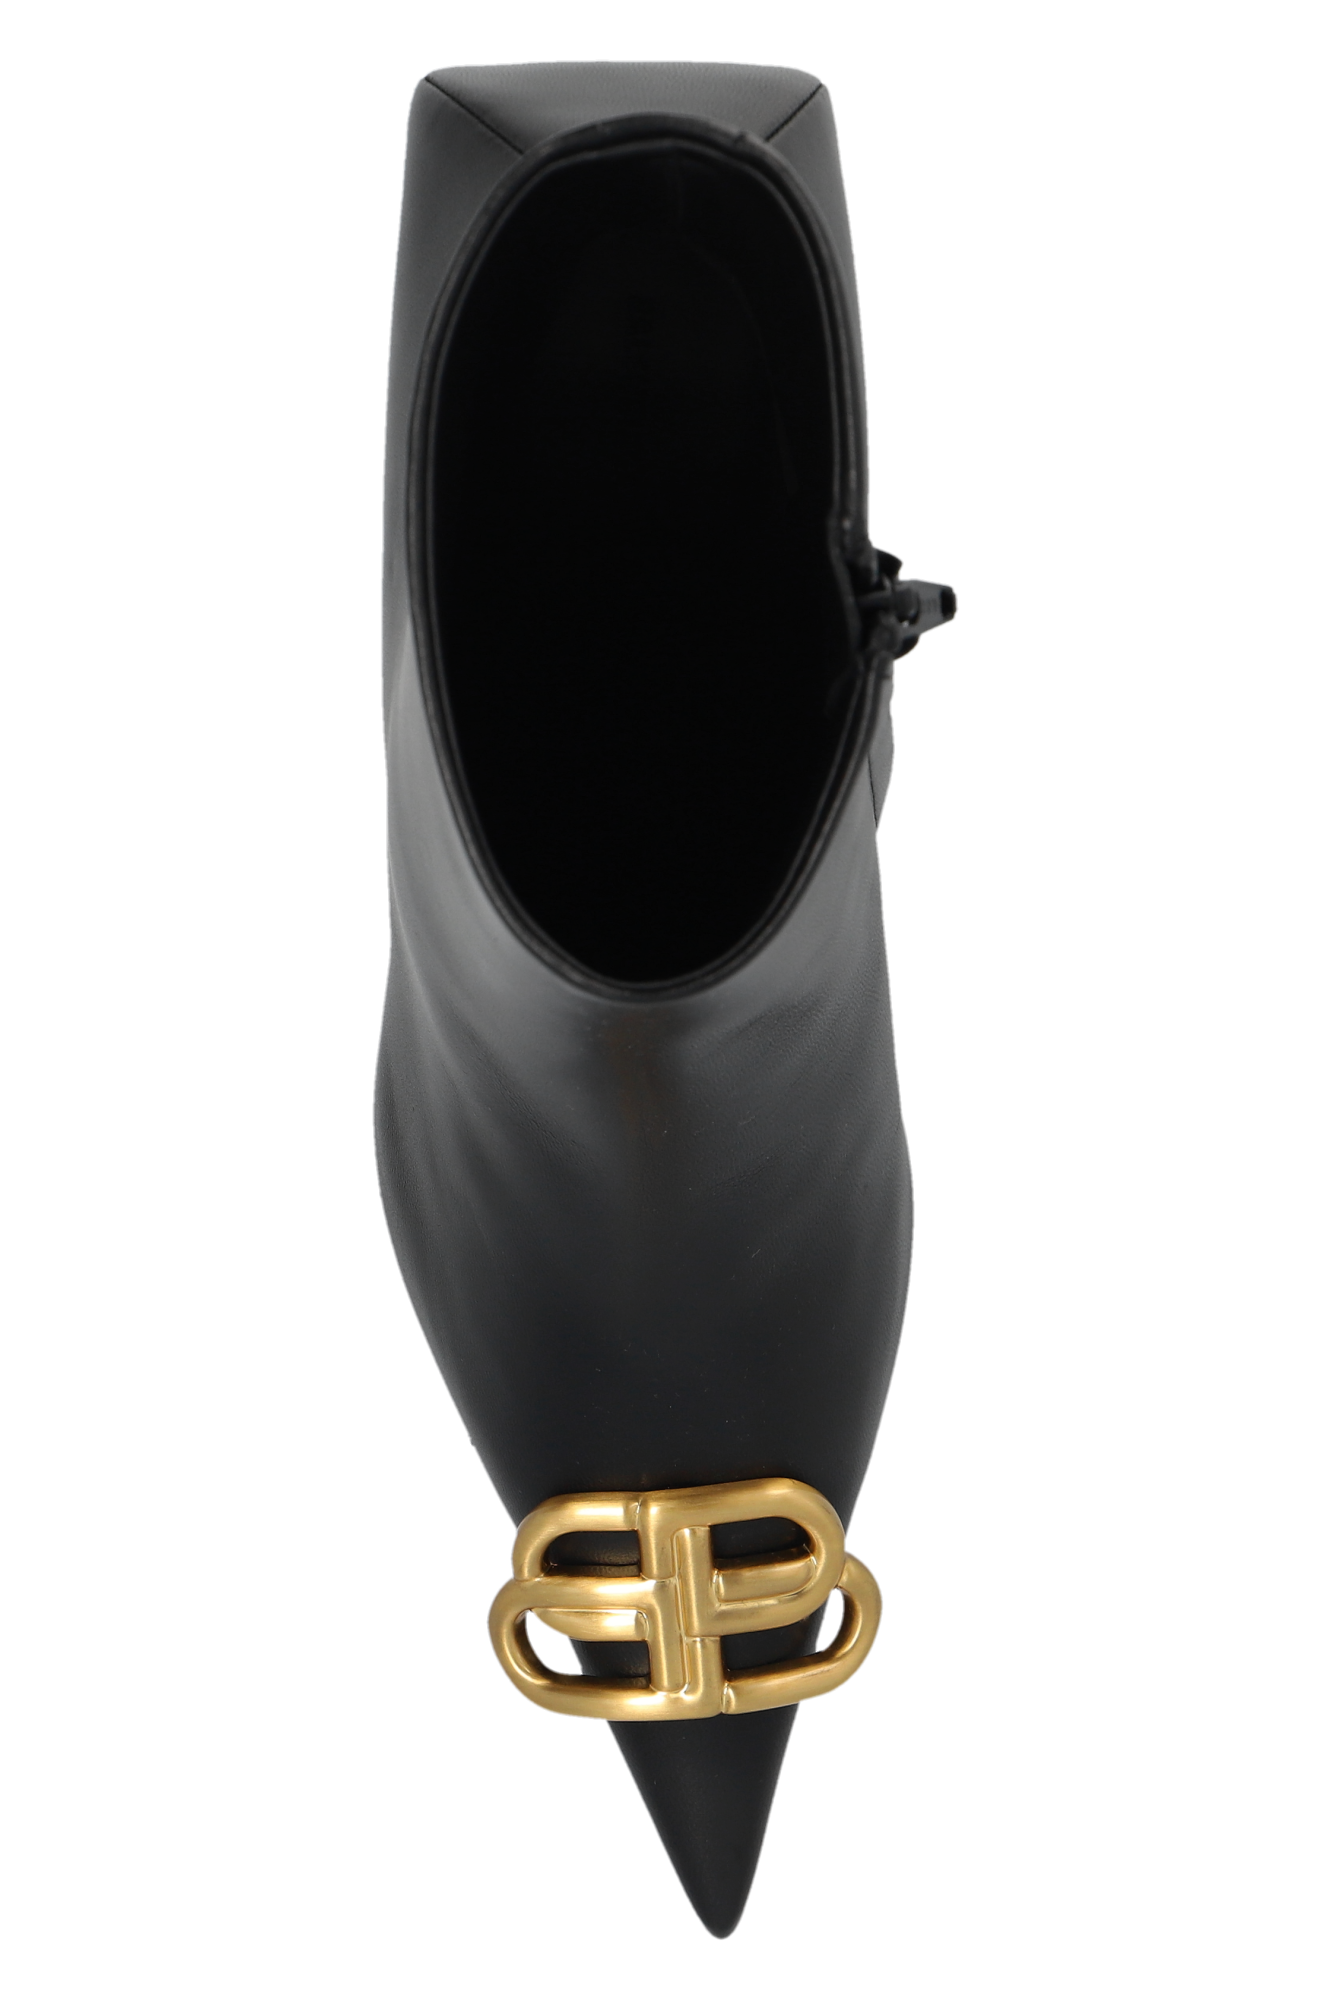 Balenciaga Adidas has brought us a ideal summer shoe with the Originals LQC